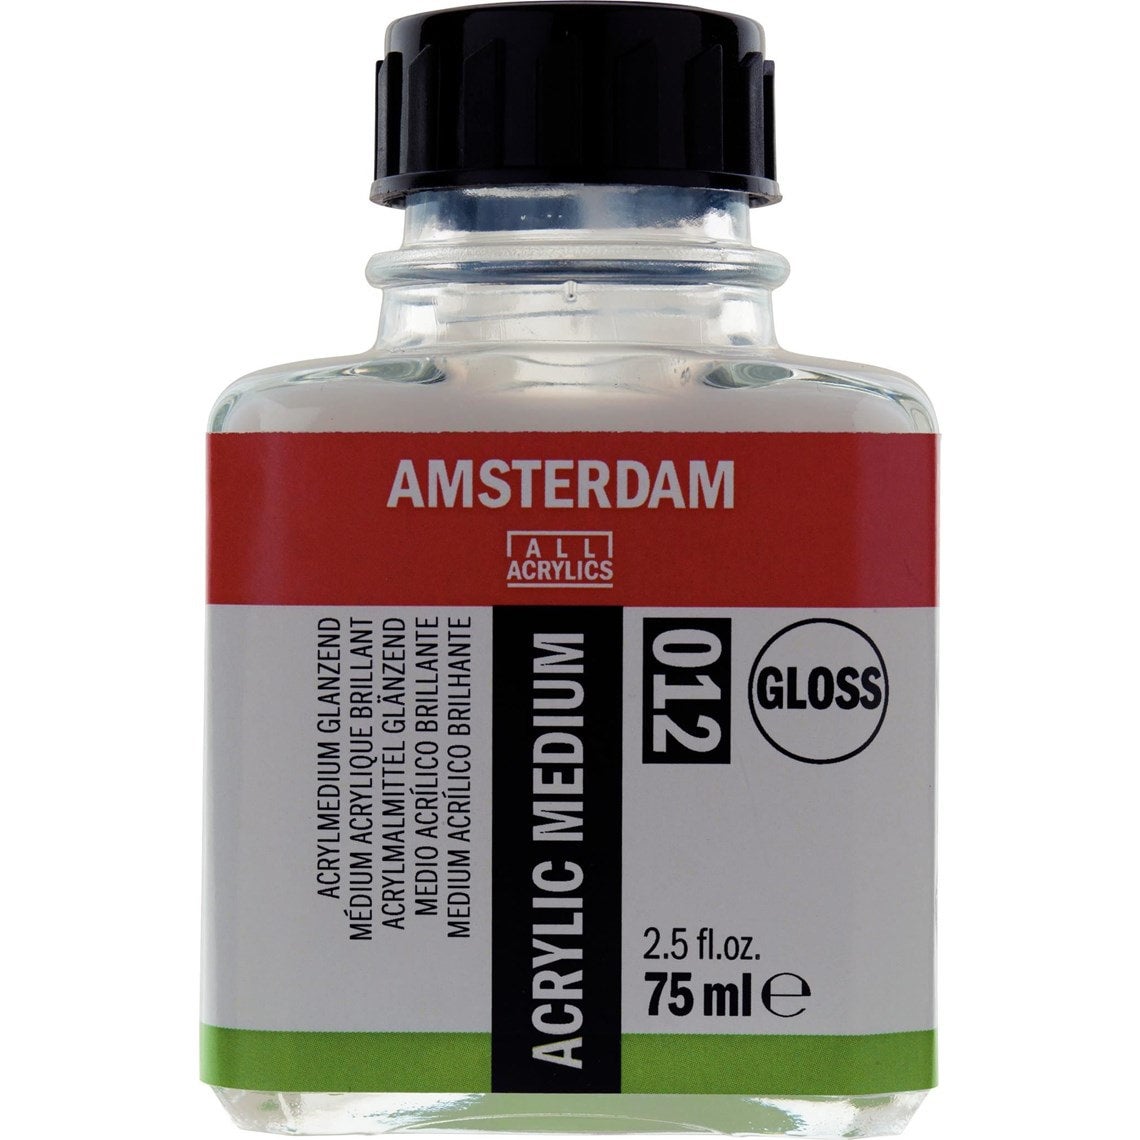 Amsterdam Acrylic Heavy Gel Medium, 500ml, Gloss